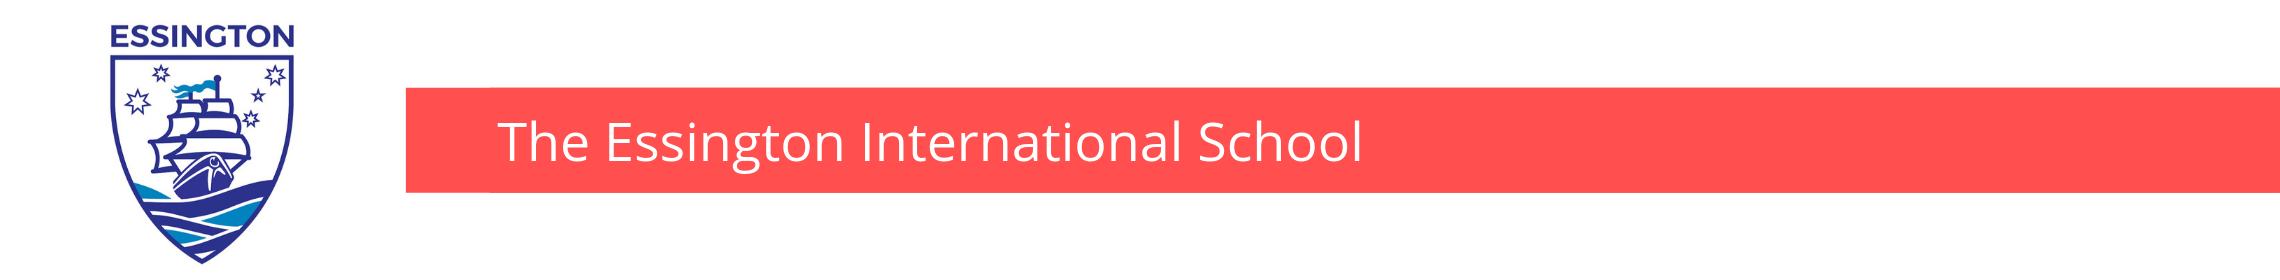 The Essington International School Banner